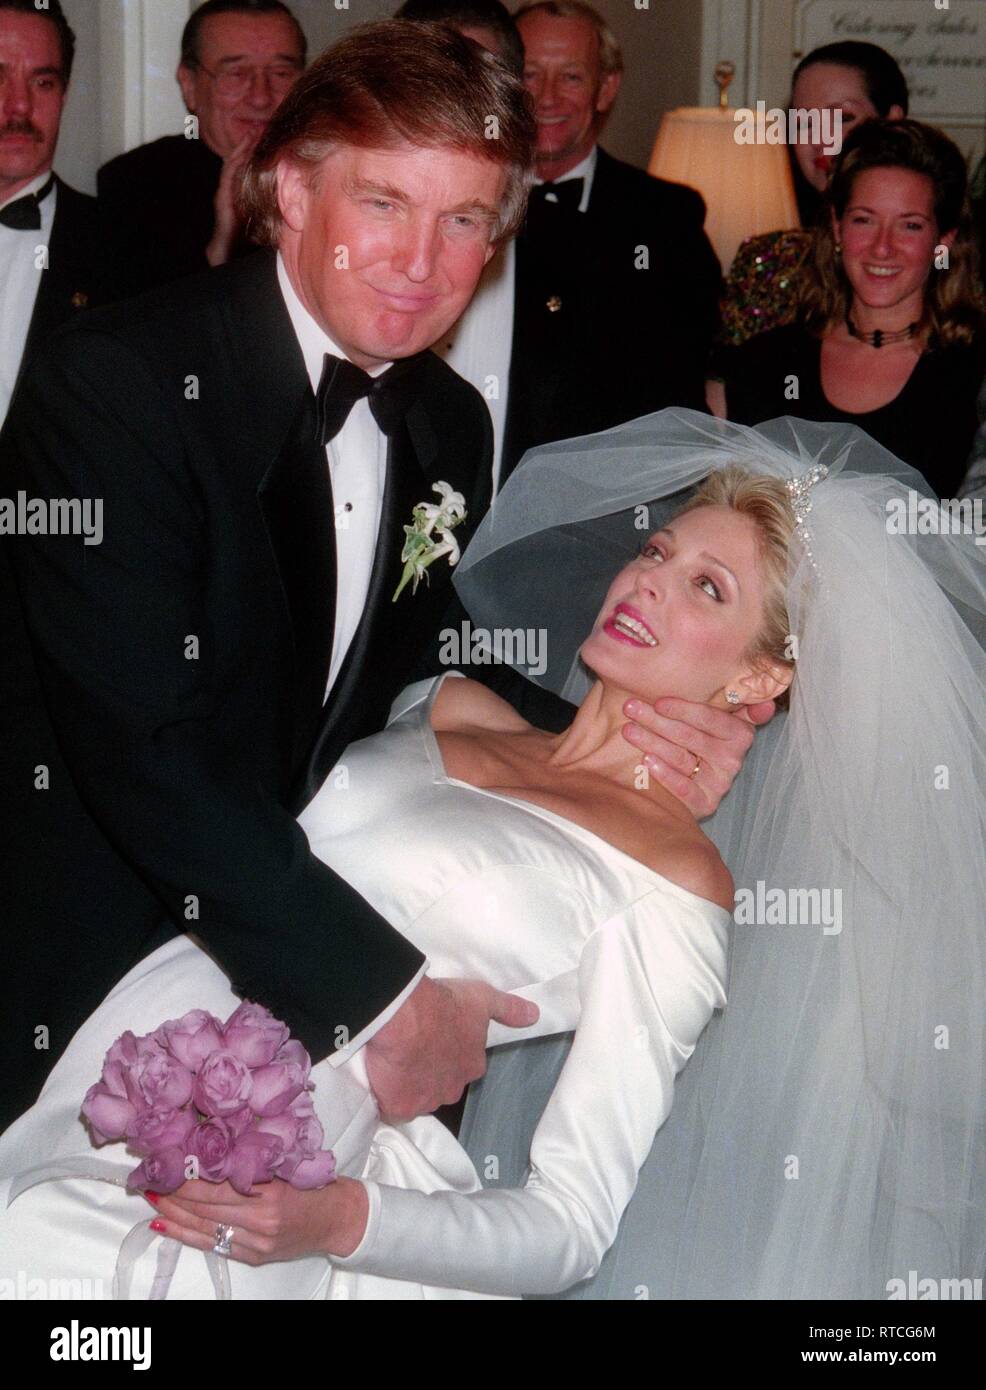 Donald Trump and Marla Maples wedding 1993-Matt Calamari in background Photo By John Barrett/PHOTOlink Stock Photo